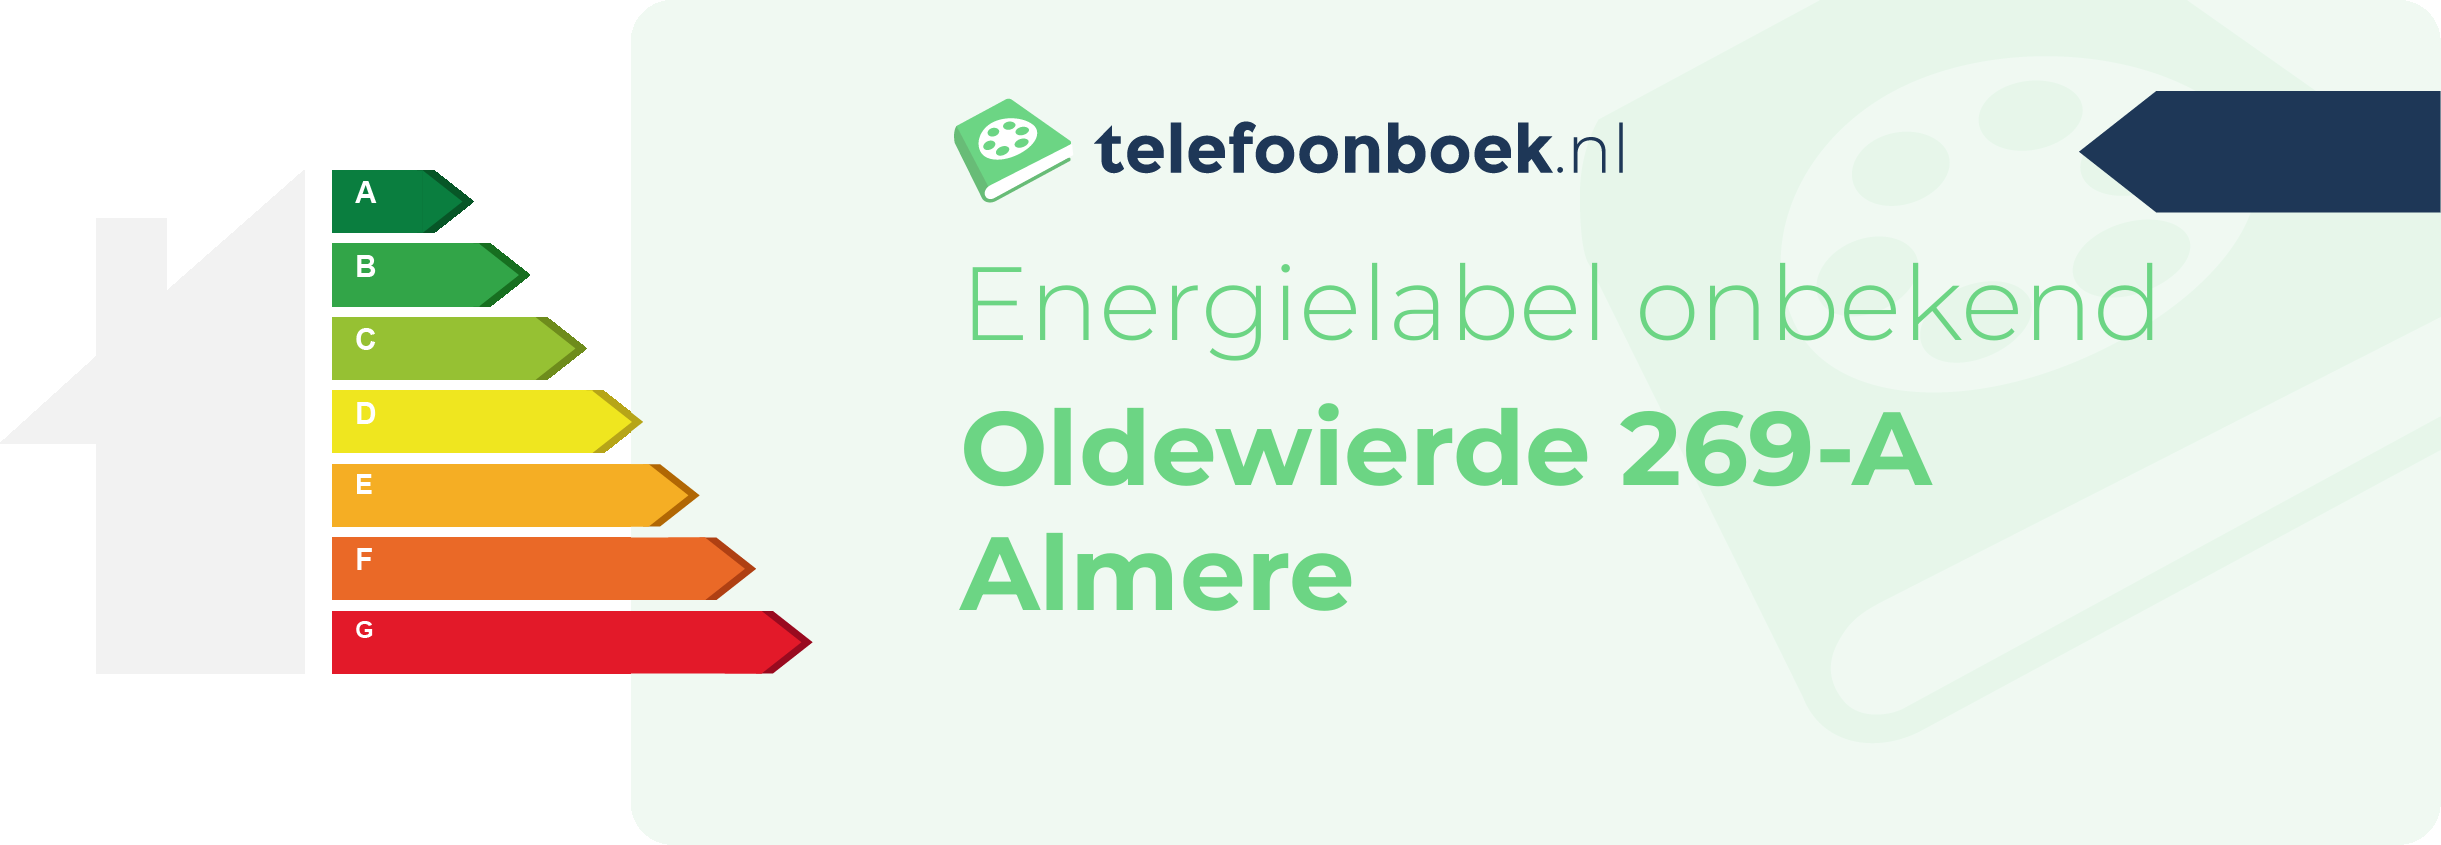 Energielabel Oldewierde 269-A Almere